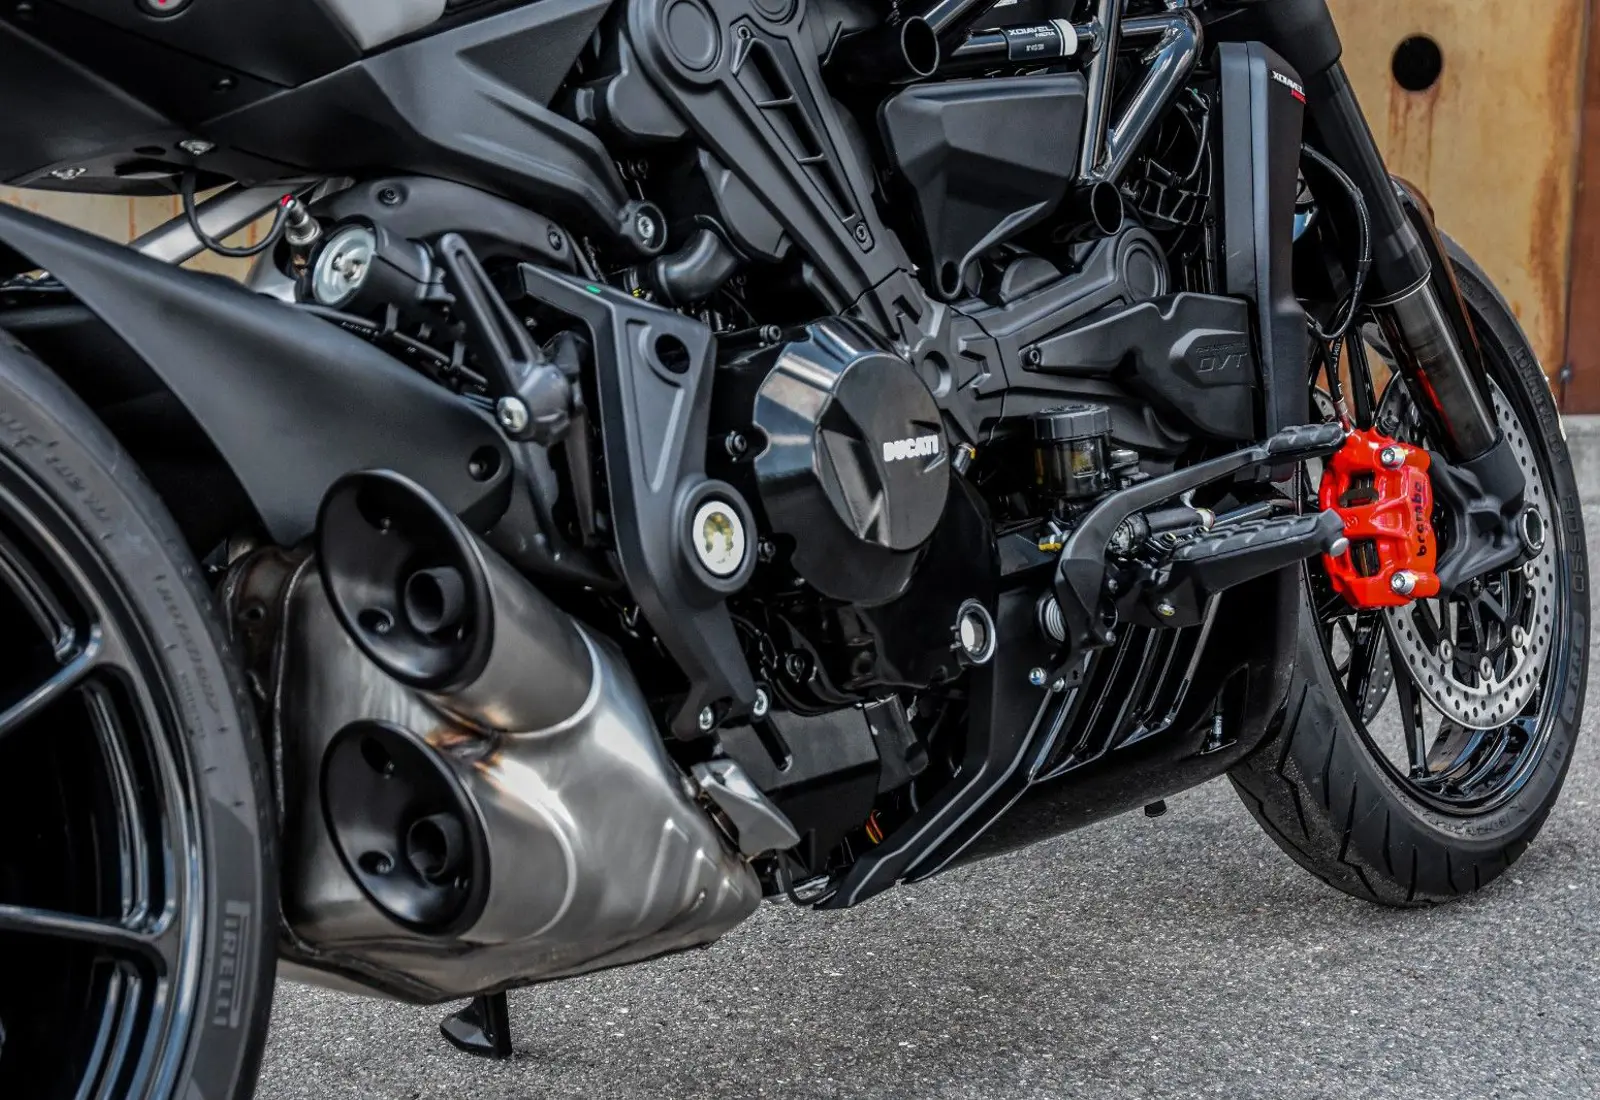 Ducati X-Diavel Nera * POLTRONA FRAU * 1 OF 500 * LIMITED ED - 44500